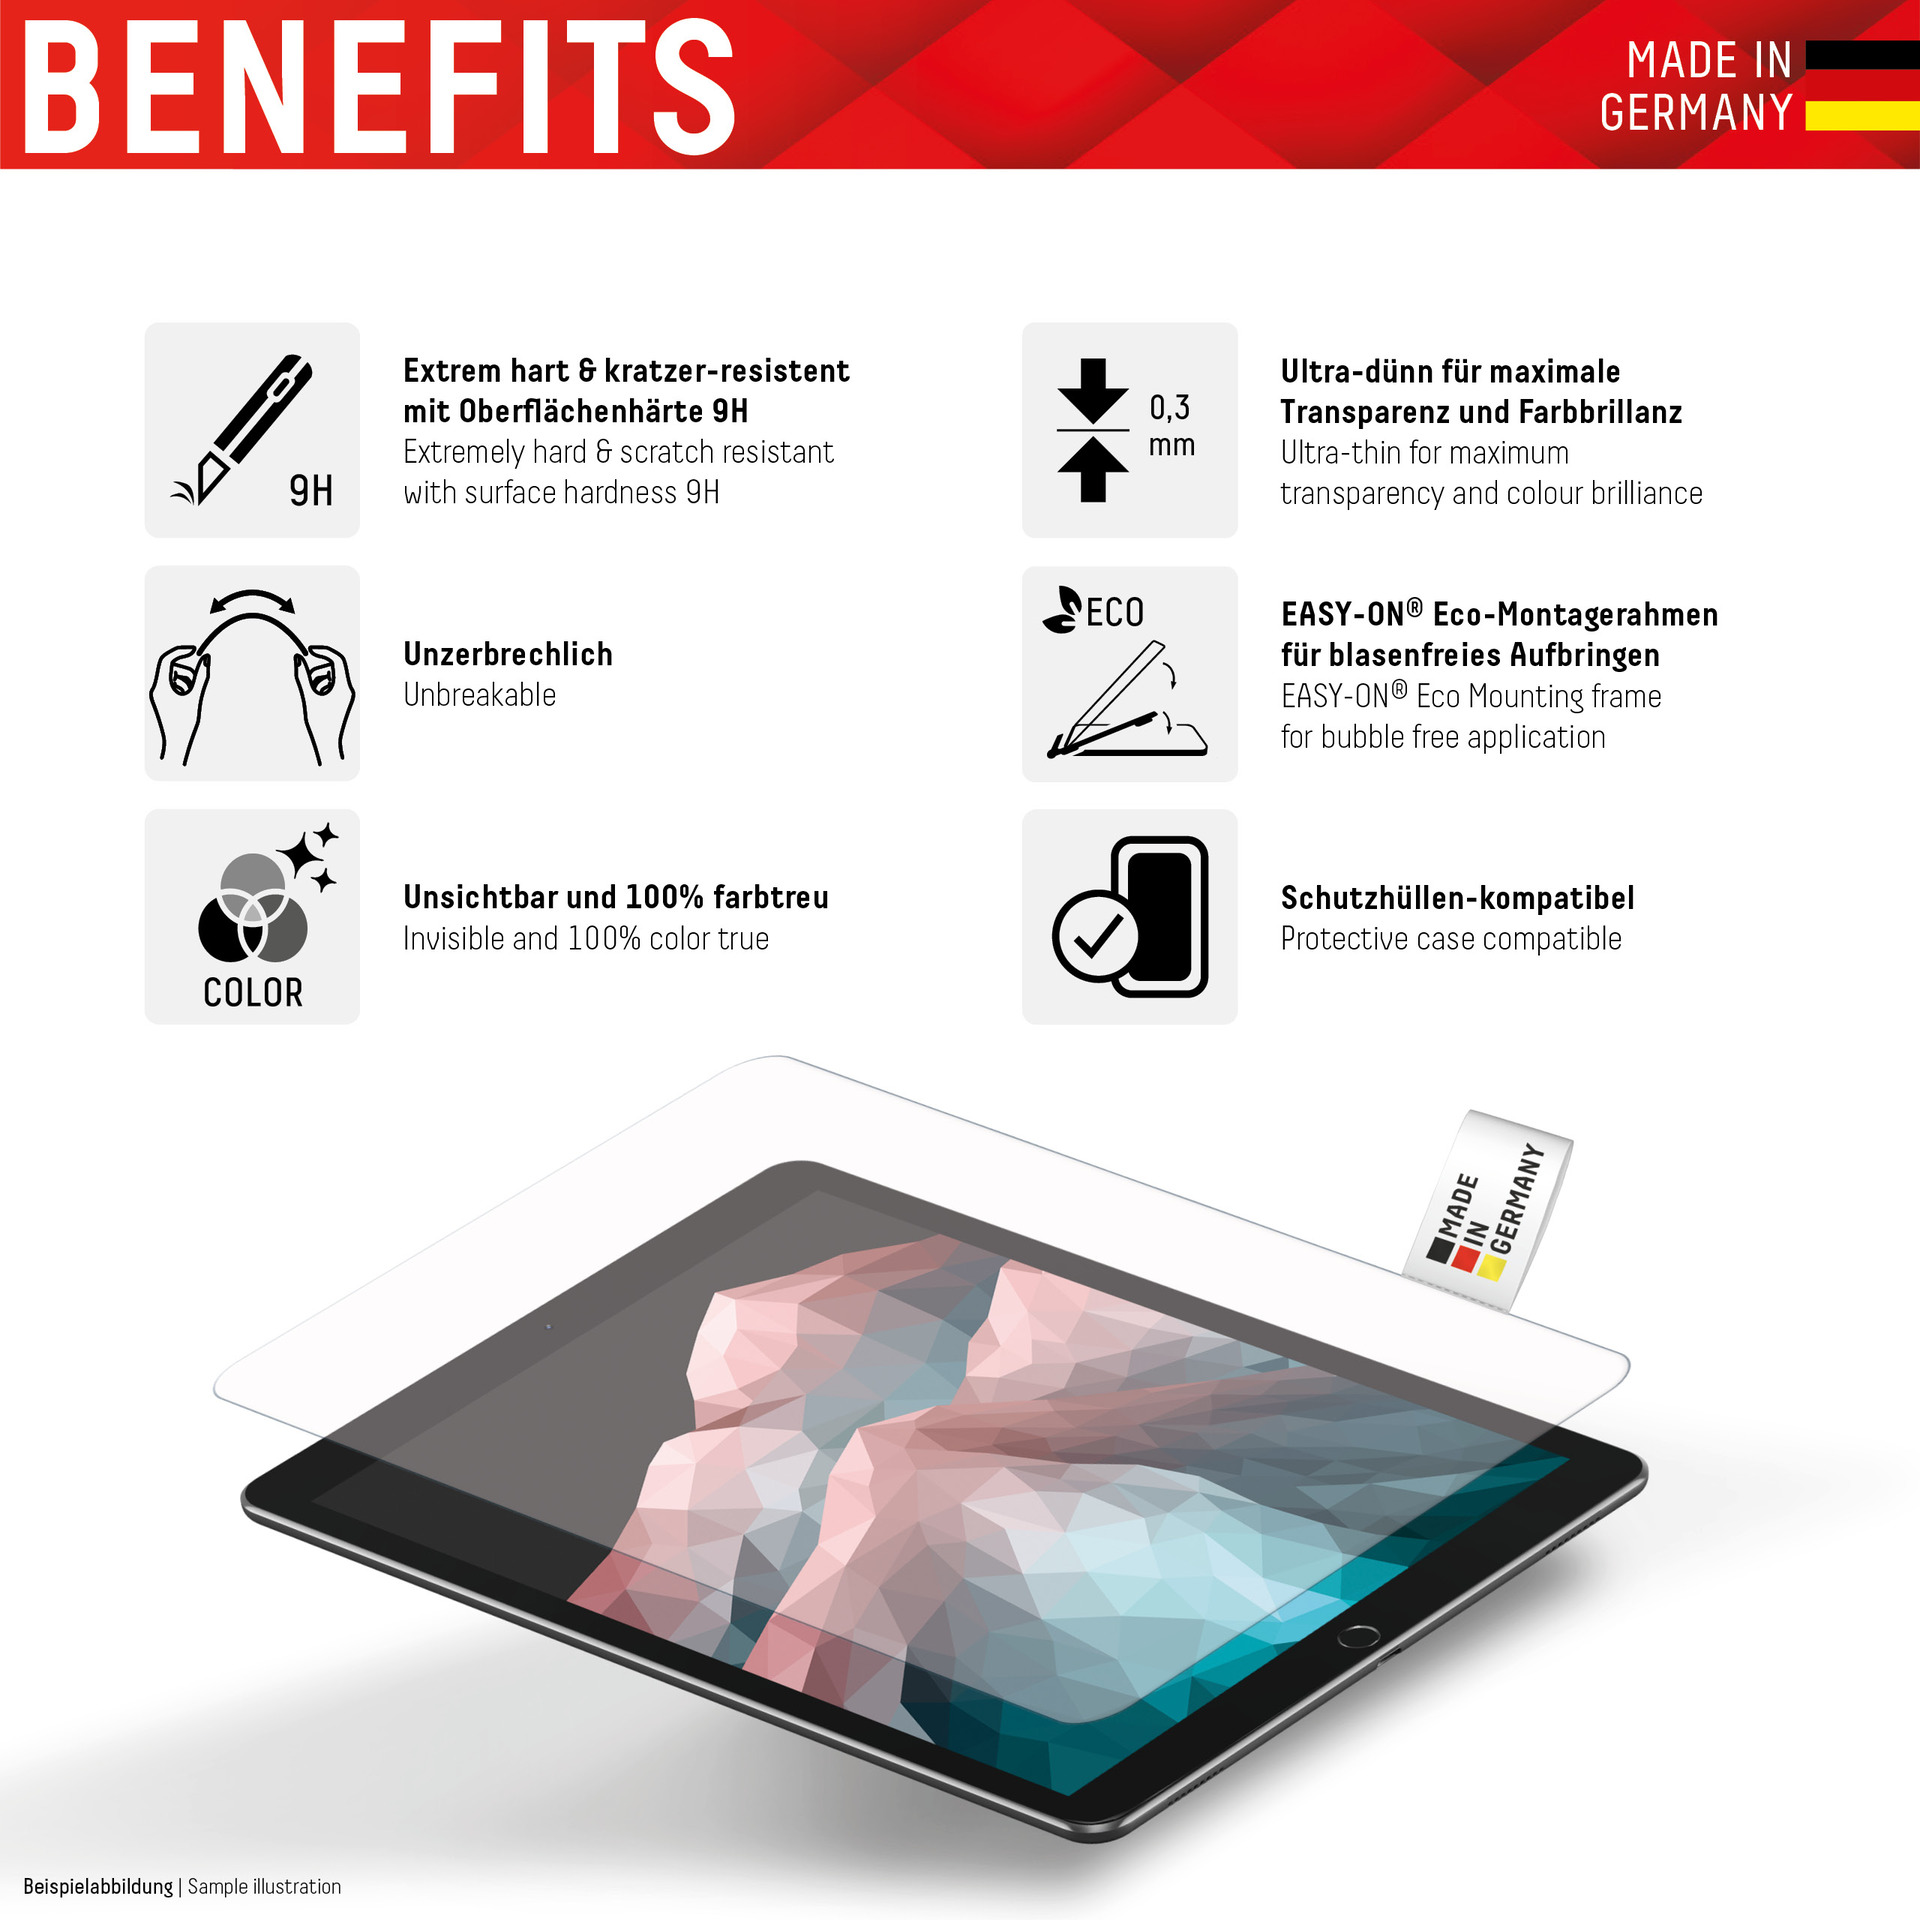 Tablet Samsung Tab Displayschutz(für Glass Galaxy DISPLEX A8)